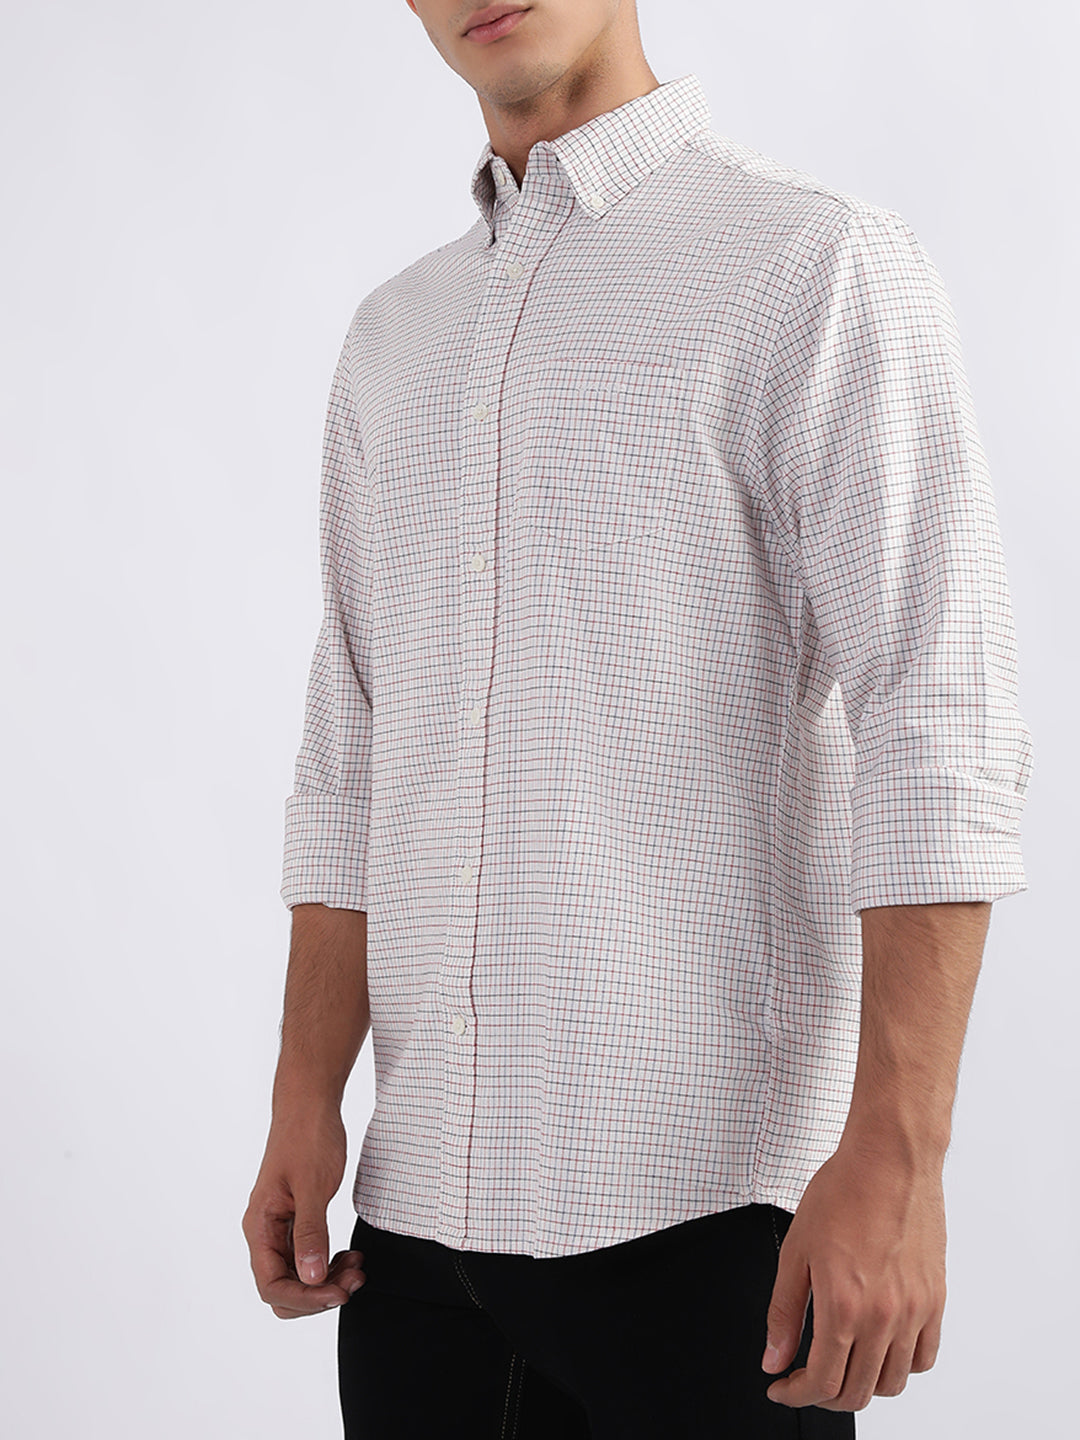 Gant Men White Collar Checkered Shirt